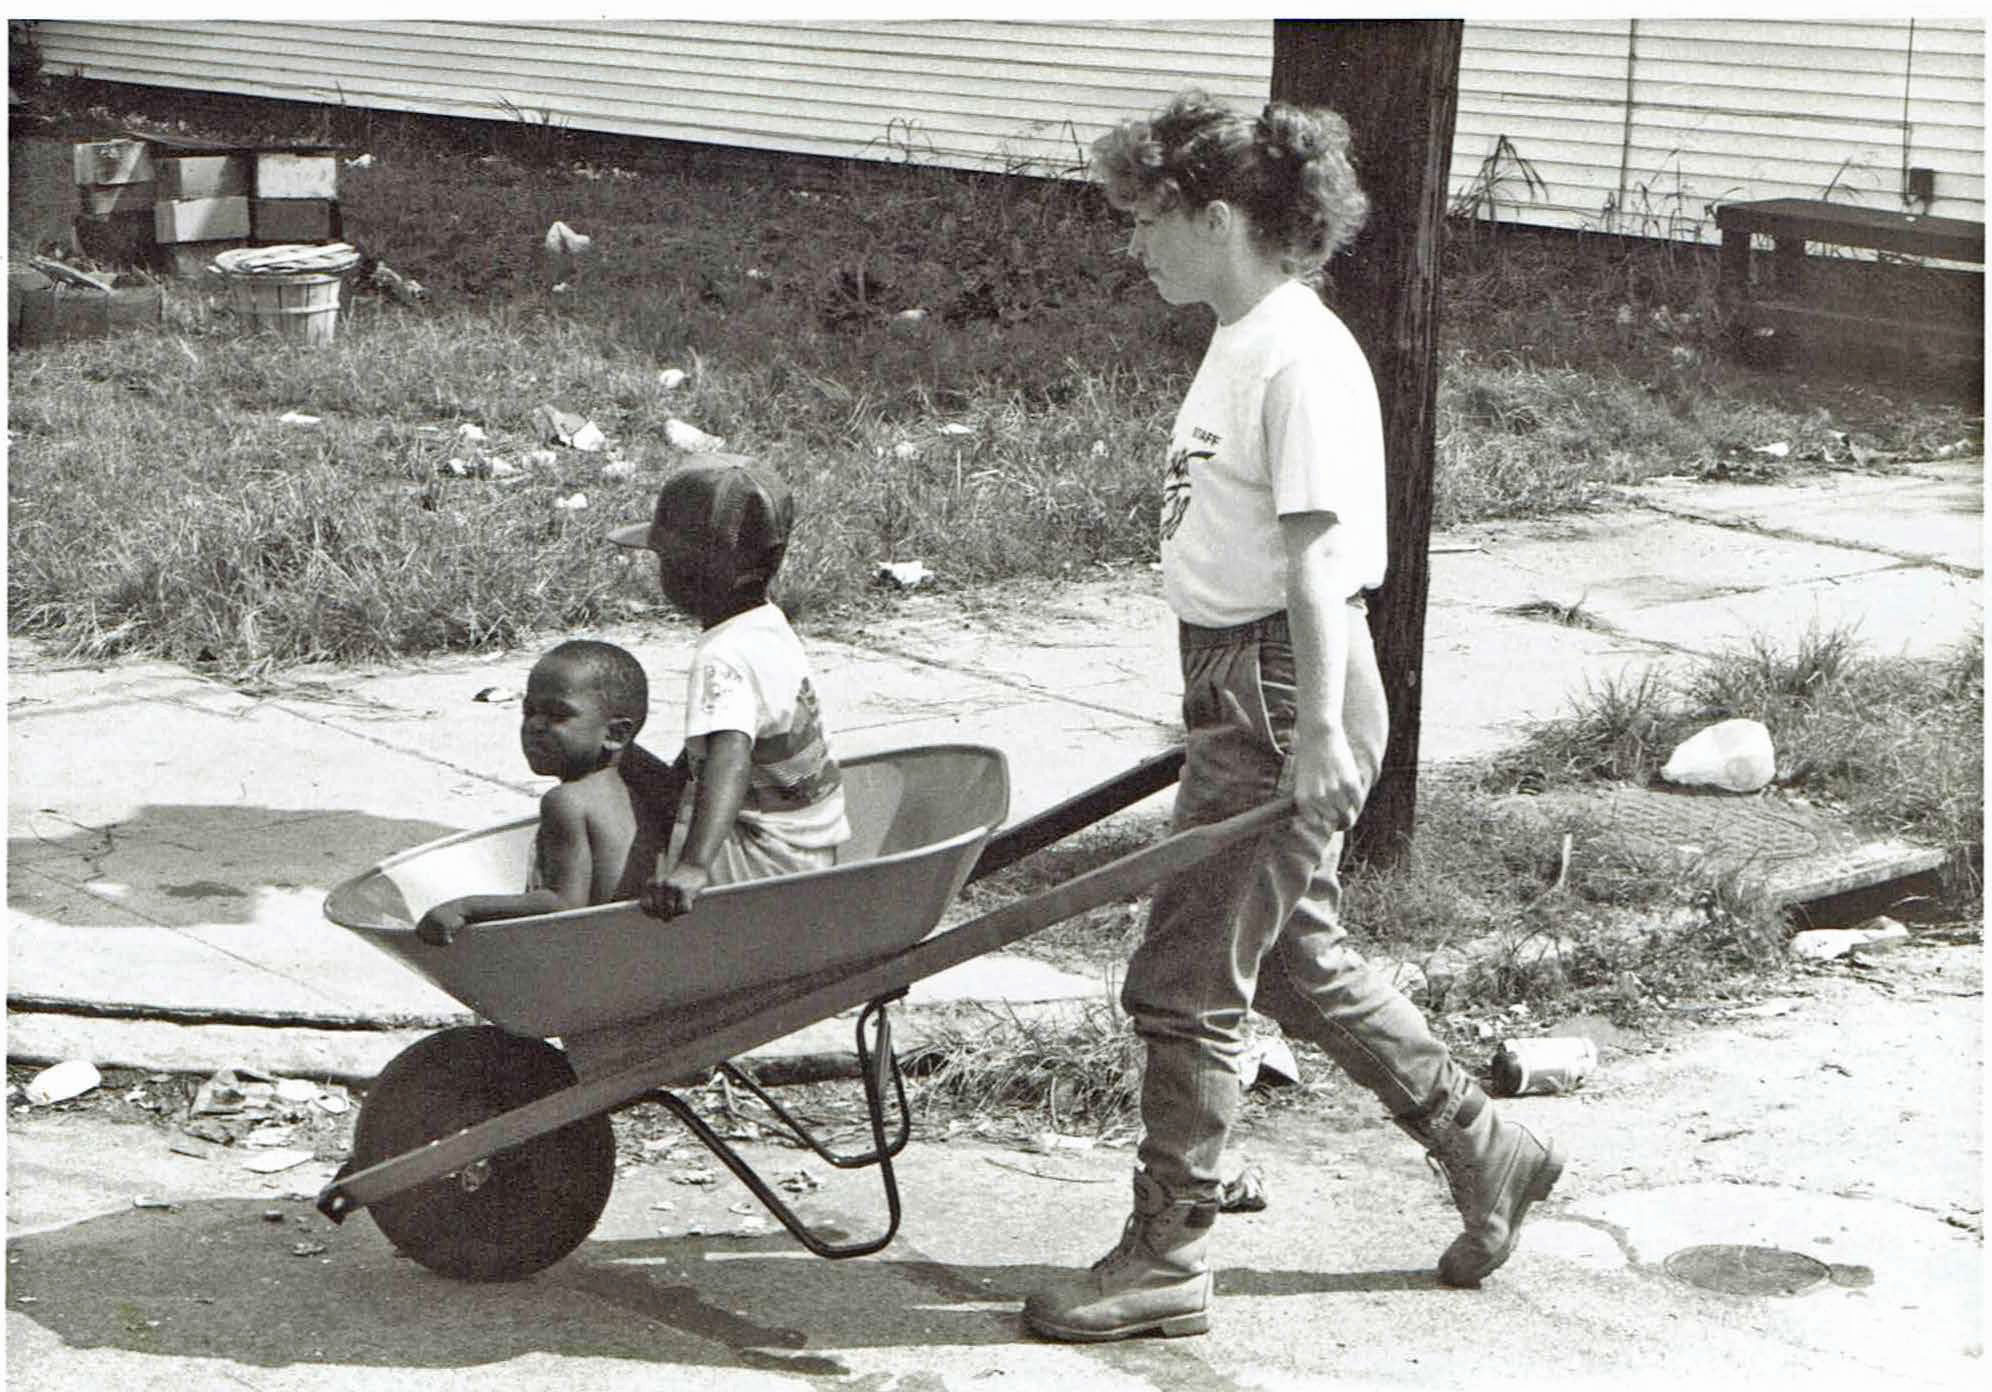 In 1989, a female SUNY Delhi volunteer pushes children to saefty in a wheelbarrow in hurricane damagaed Charleston, South Carolina.